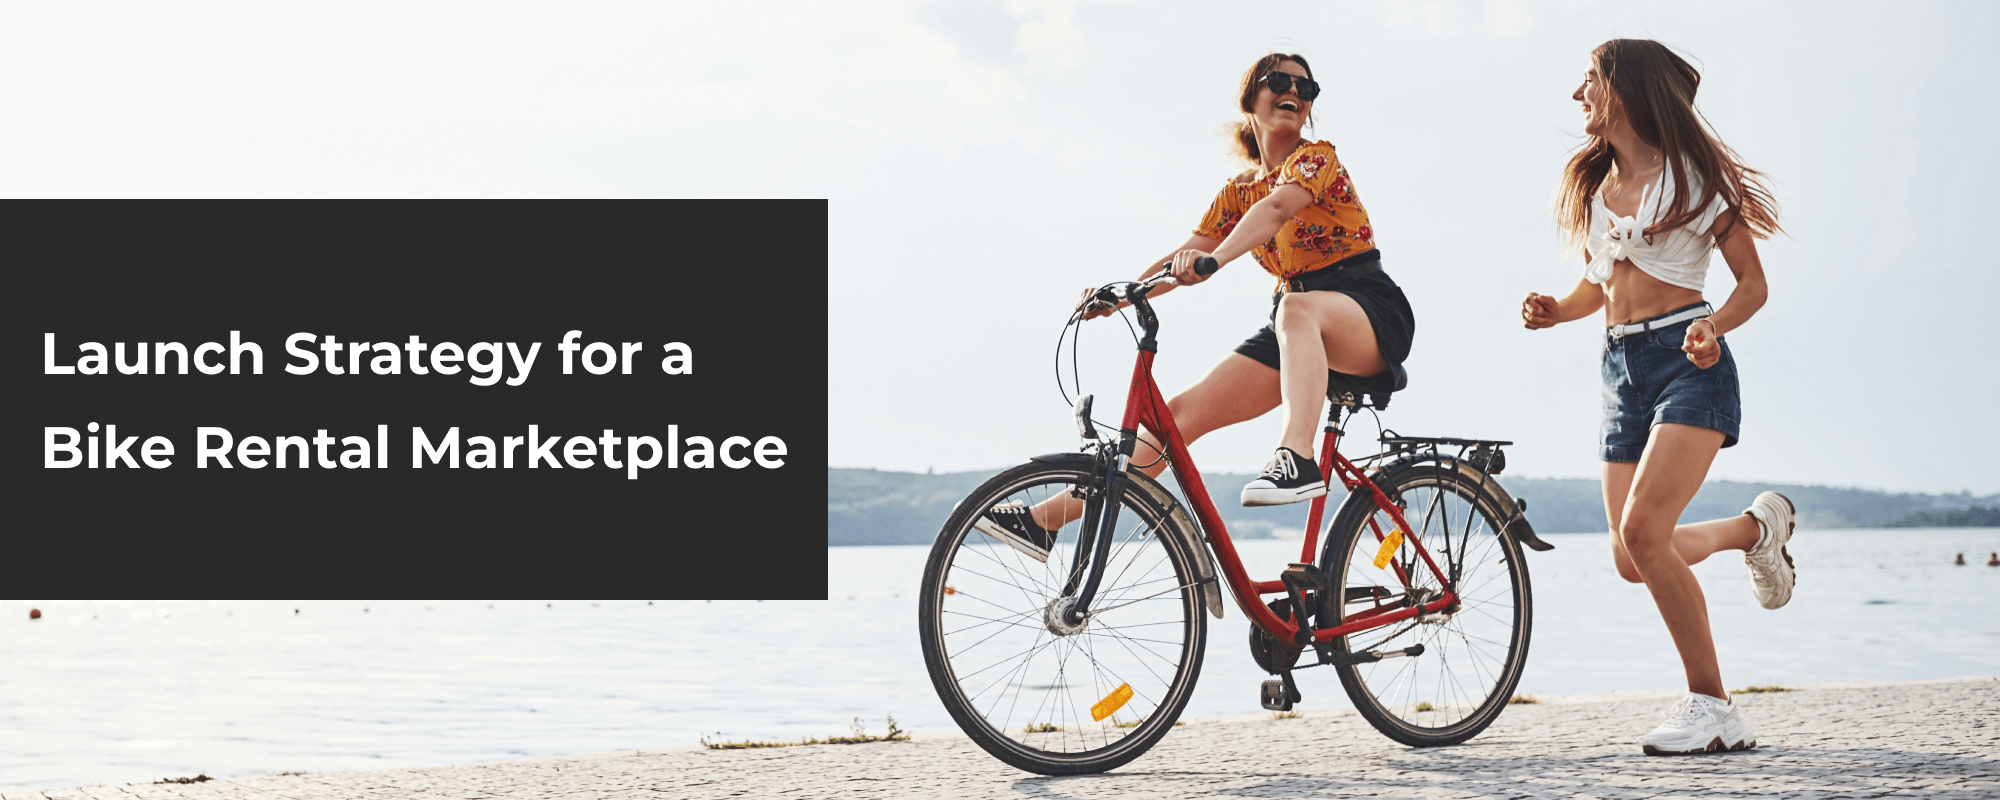 Build Bike Rental Marketplace – Key Features of Bike Rental Software